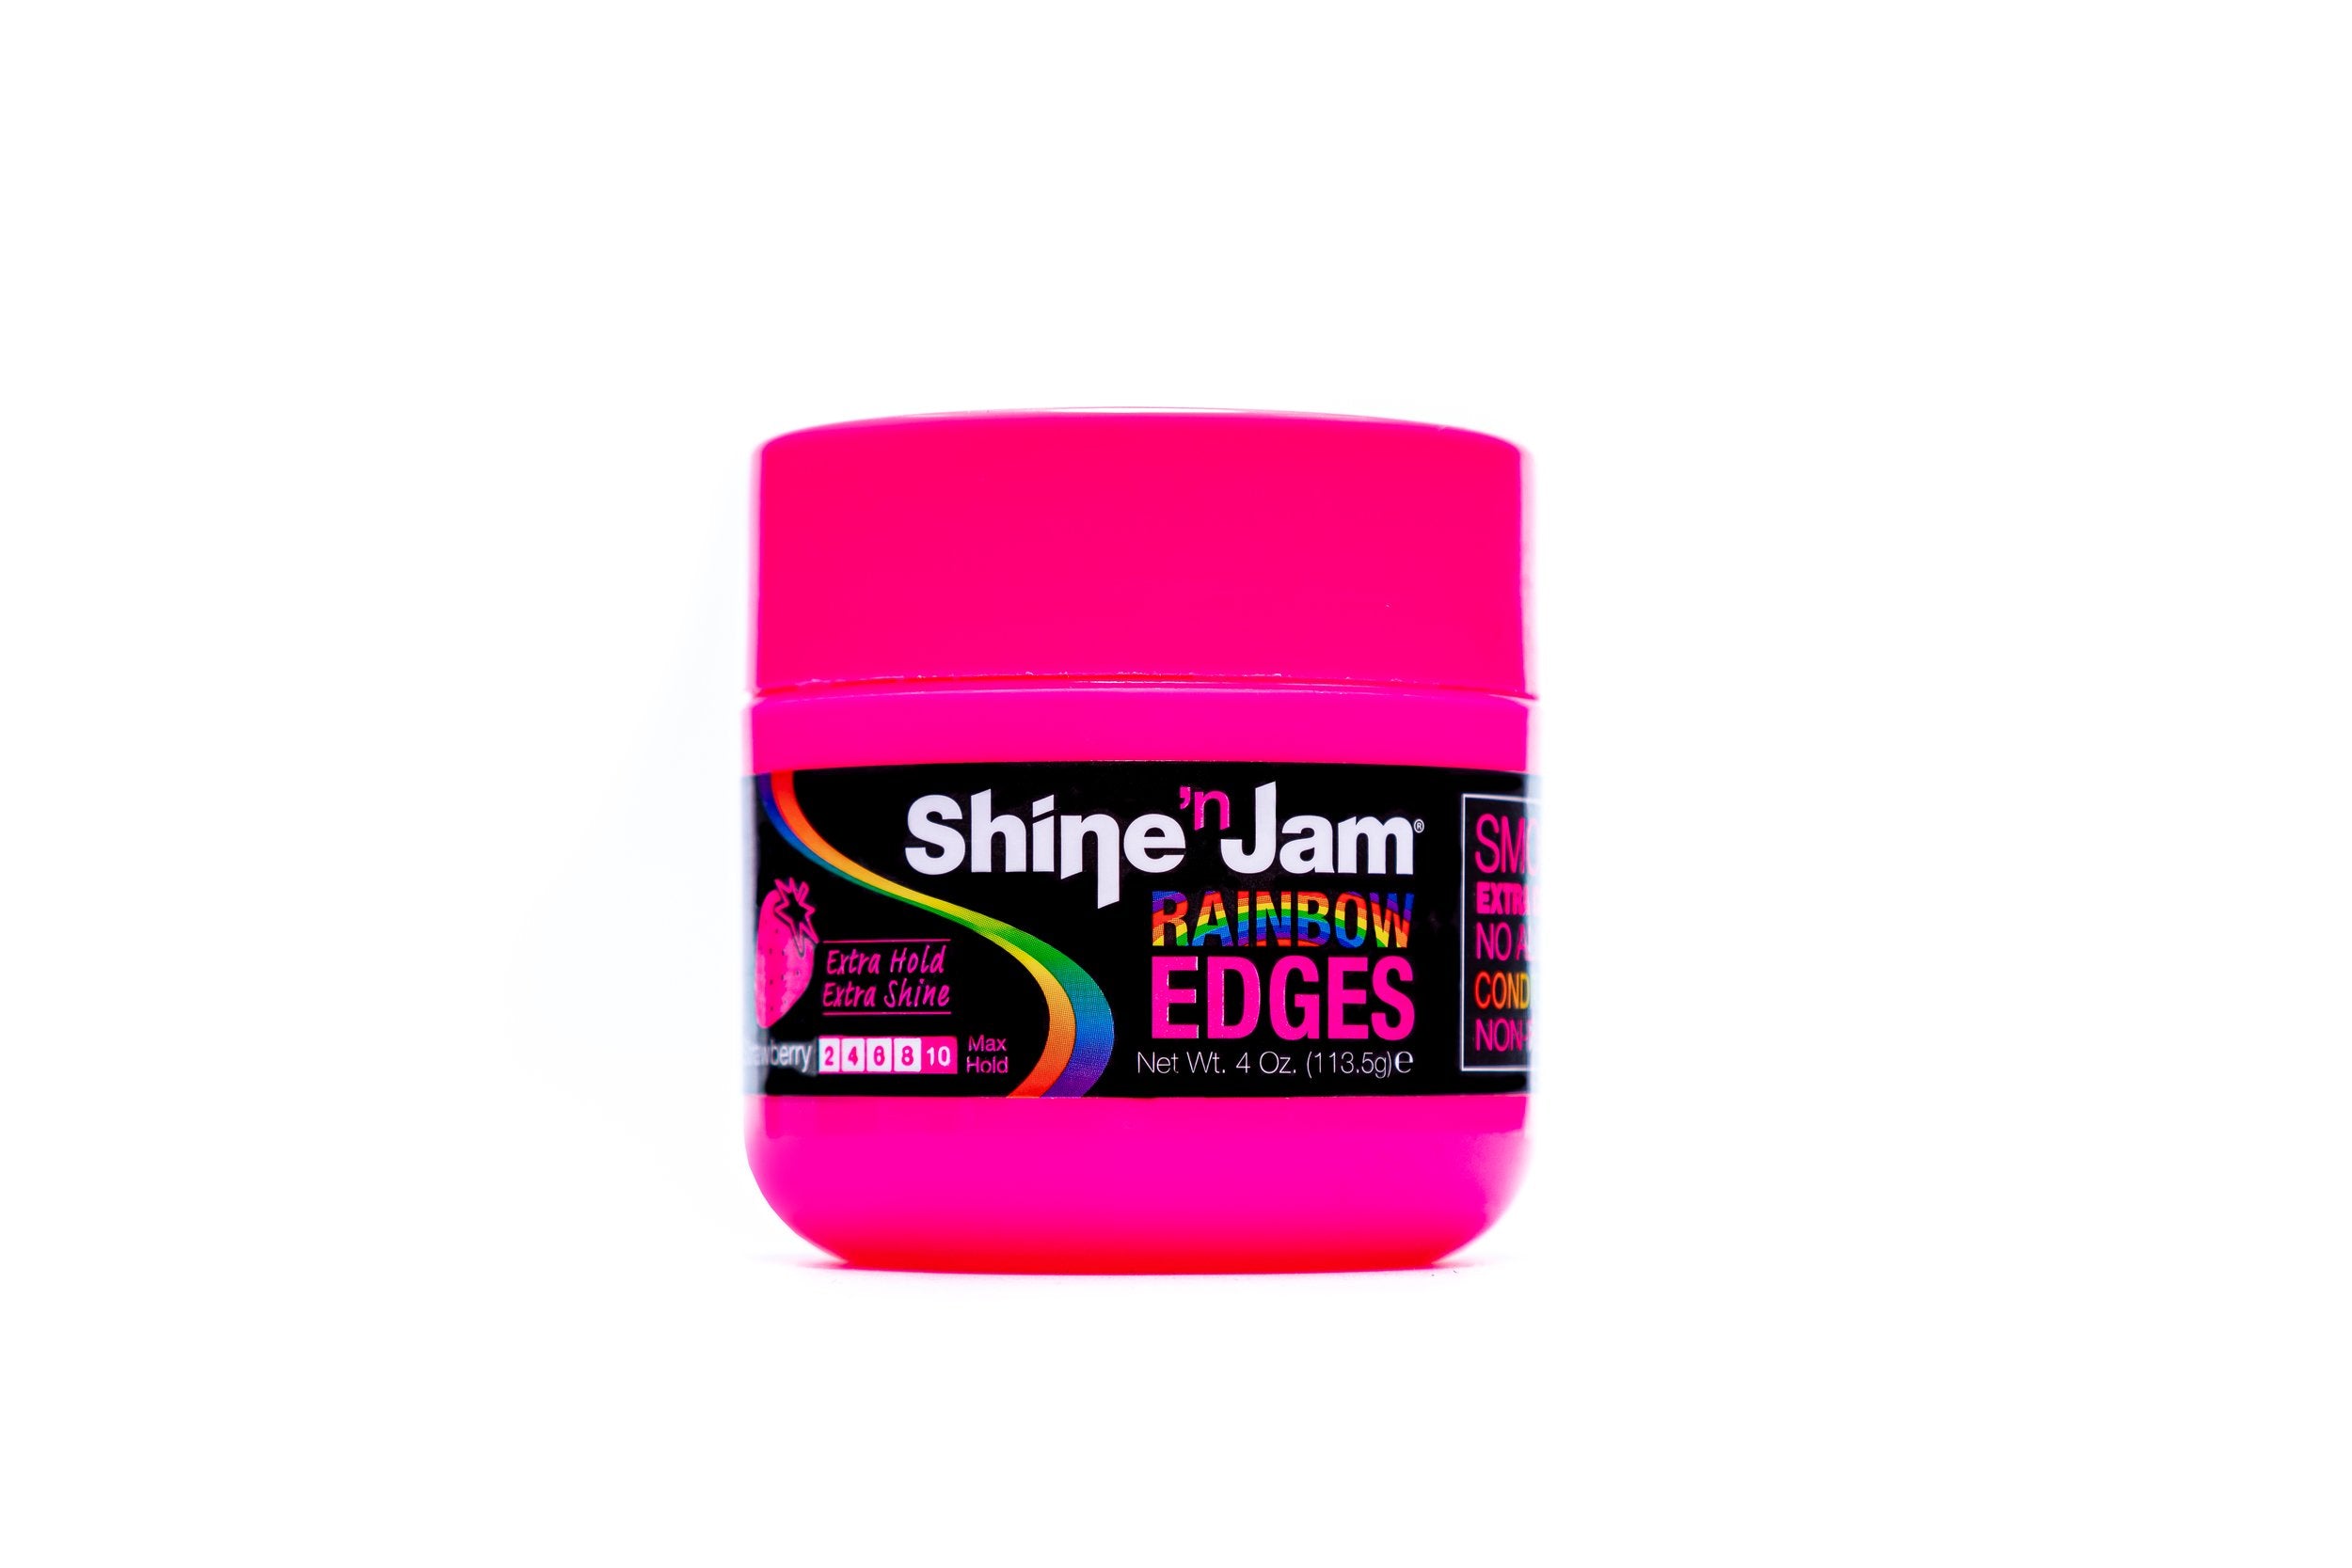 Ampro Shine 'N Jam Rainbow Edges Strawberry, 4 Oz (AM41276)